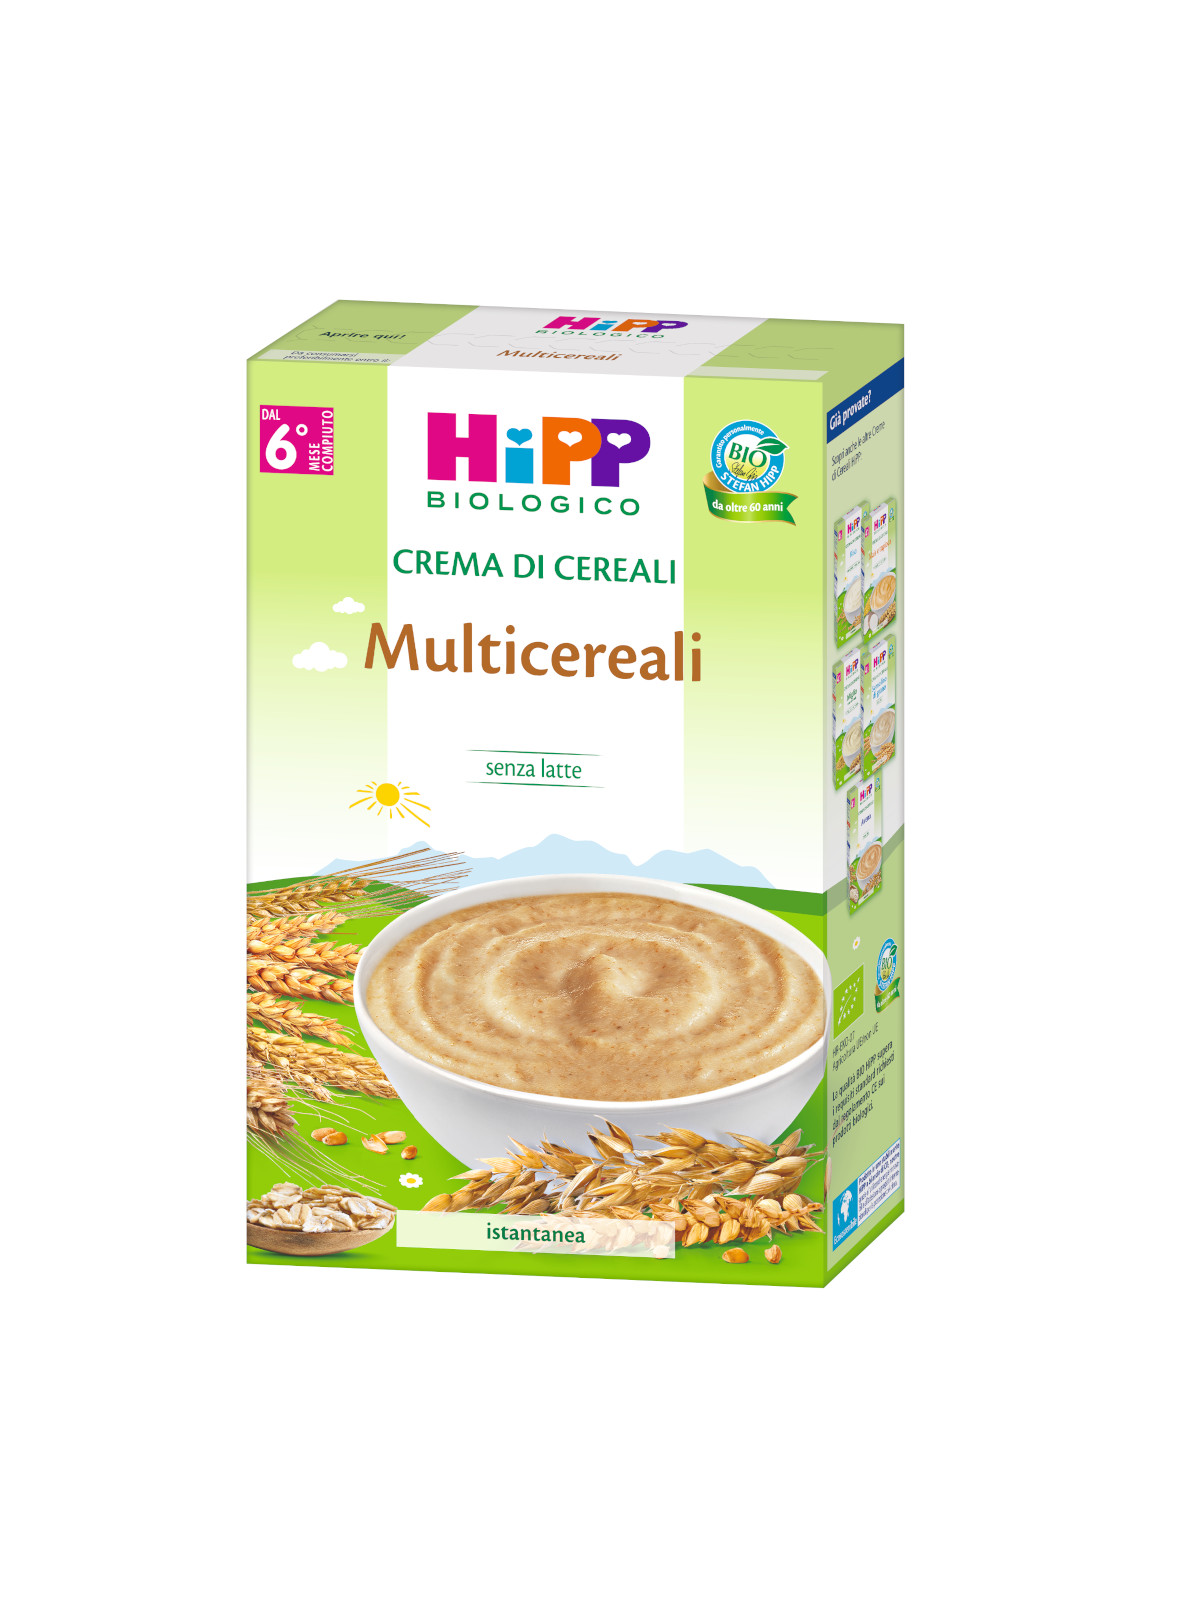 Crema di cereali multicereali 200g - Hipp